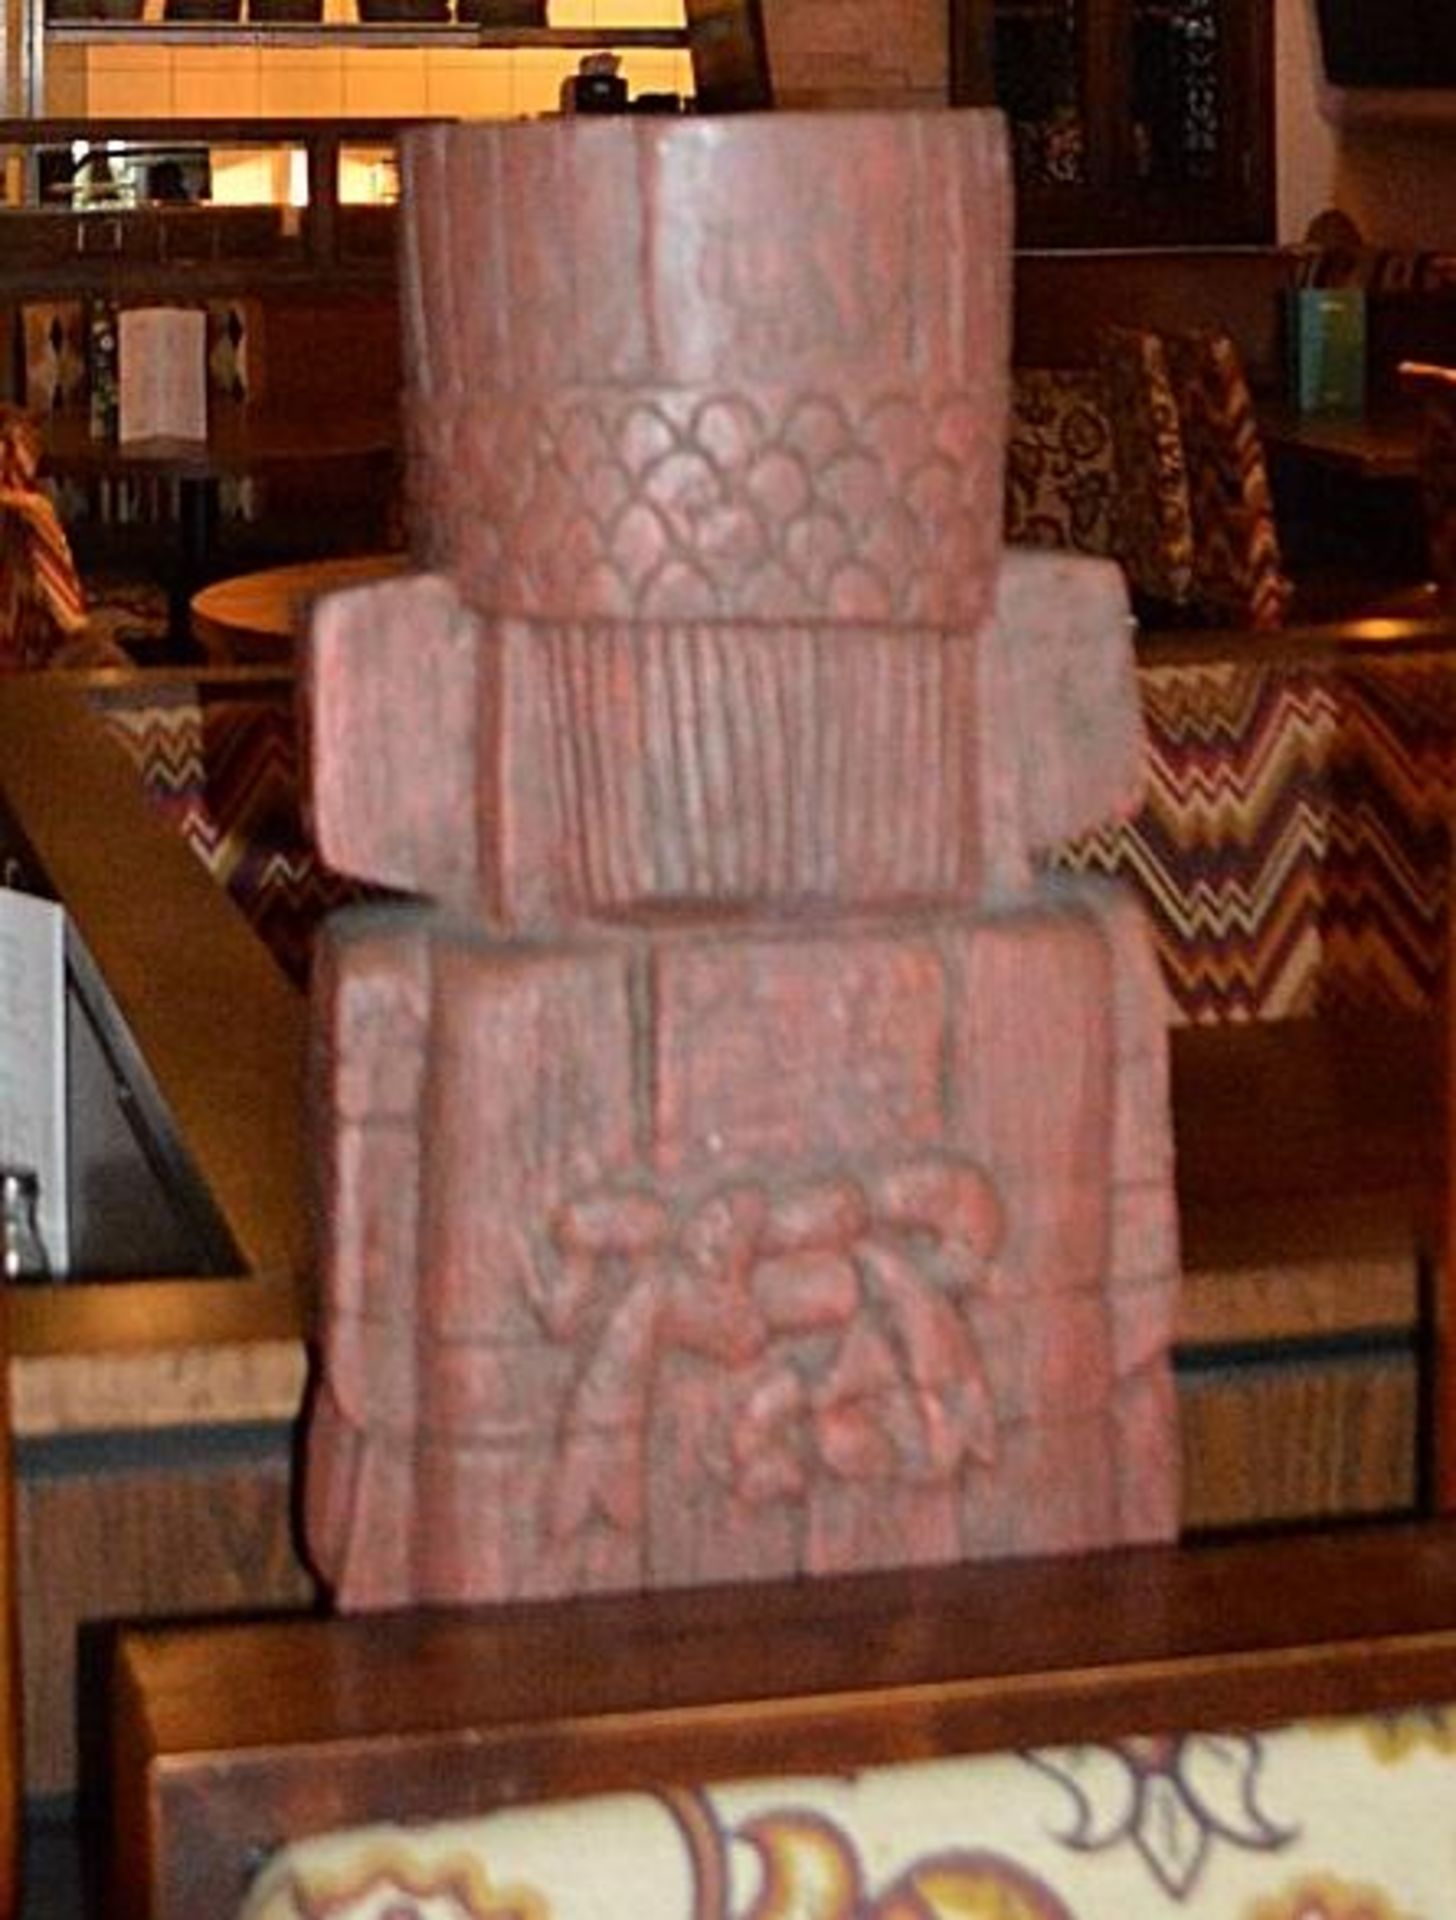 1 x Deceorative Aztec Idol Statue - Dimensions: H74 x W40 x D24cm - CL367 - Ref CQ-FB - Location: - Image 2 of 2